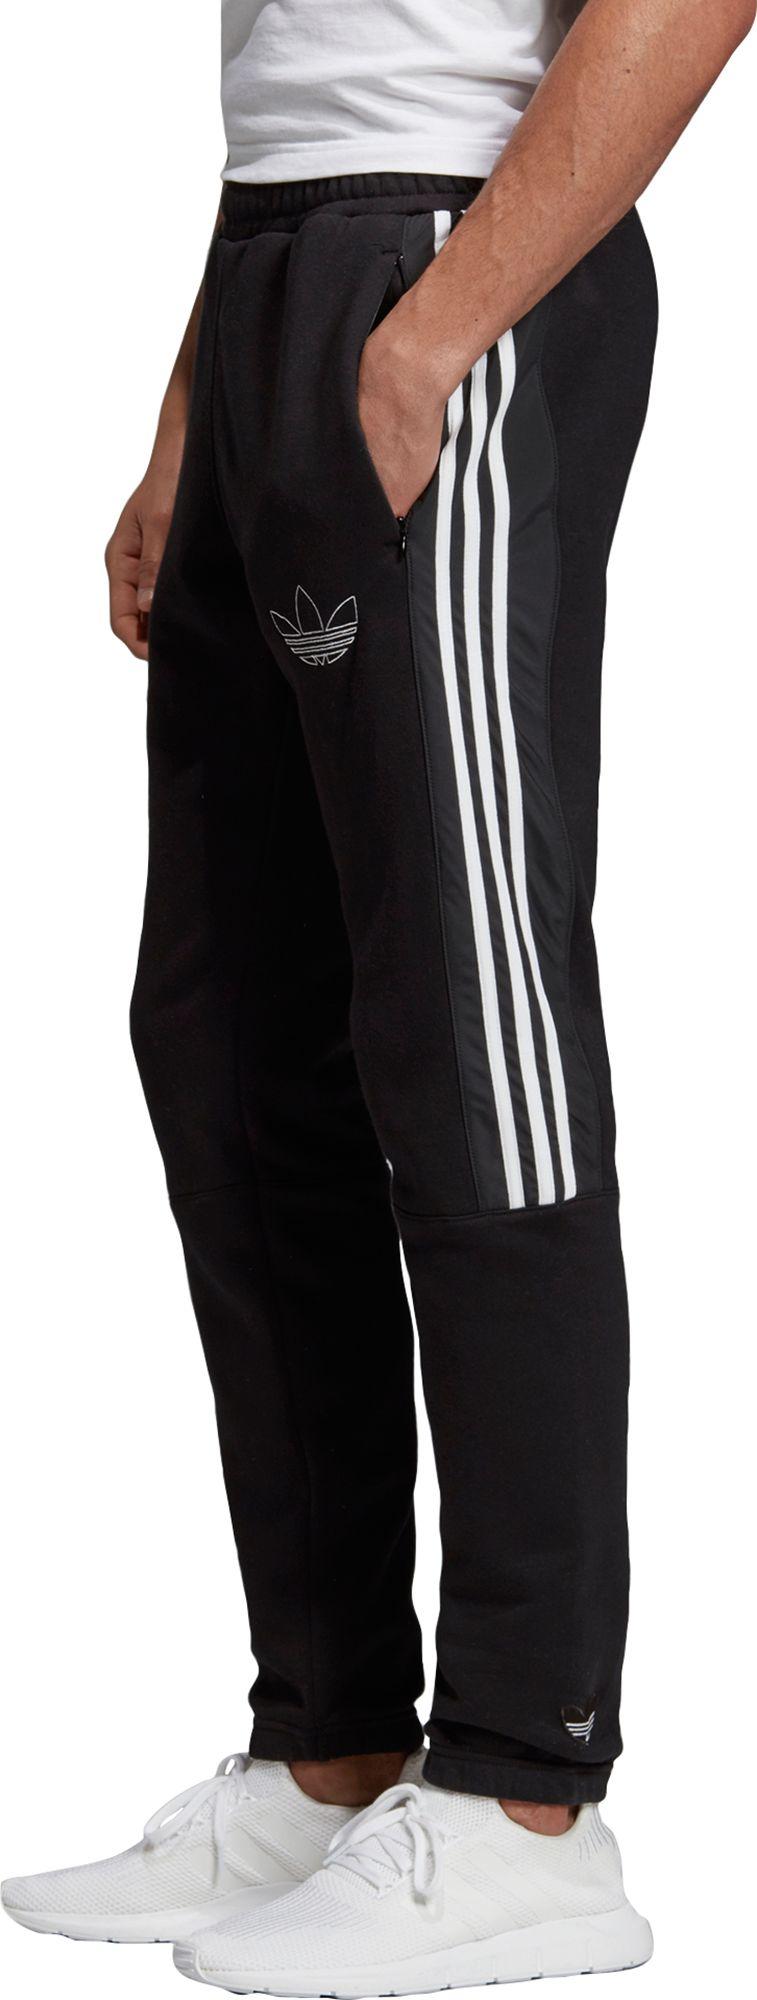 adidas Fleece Originals Outline Logo Sweatpants in Black for Men - Lyst